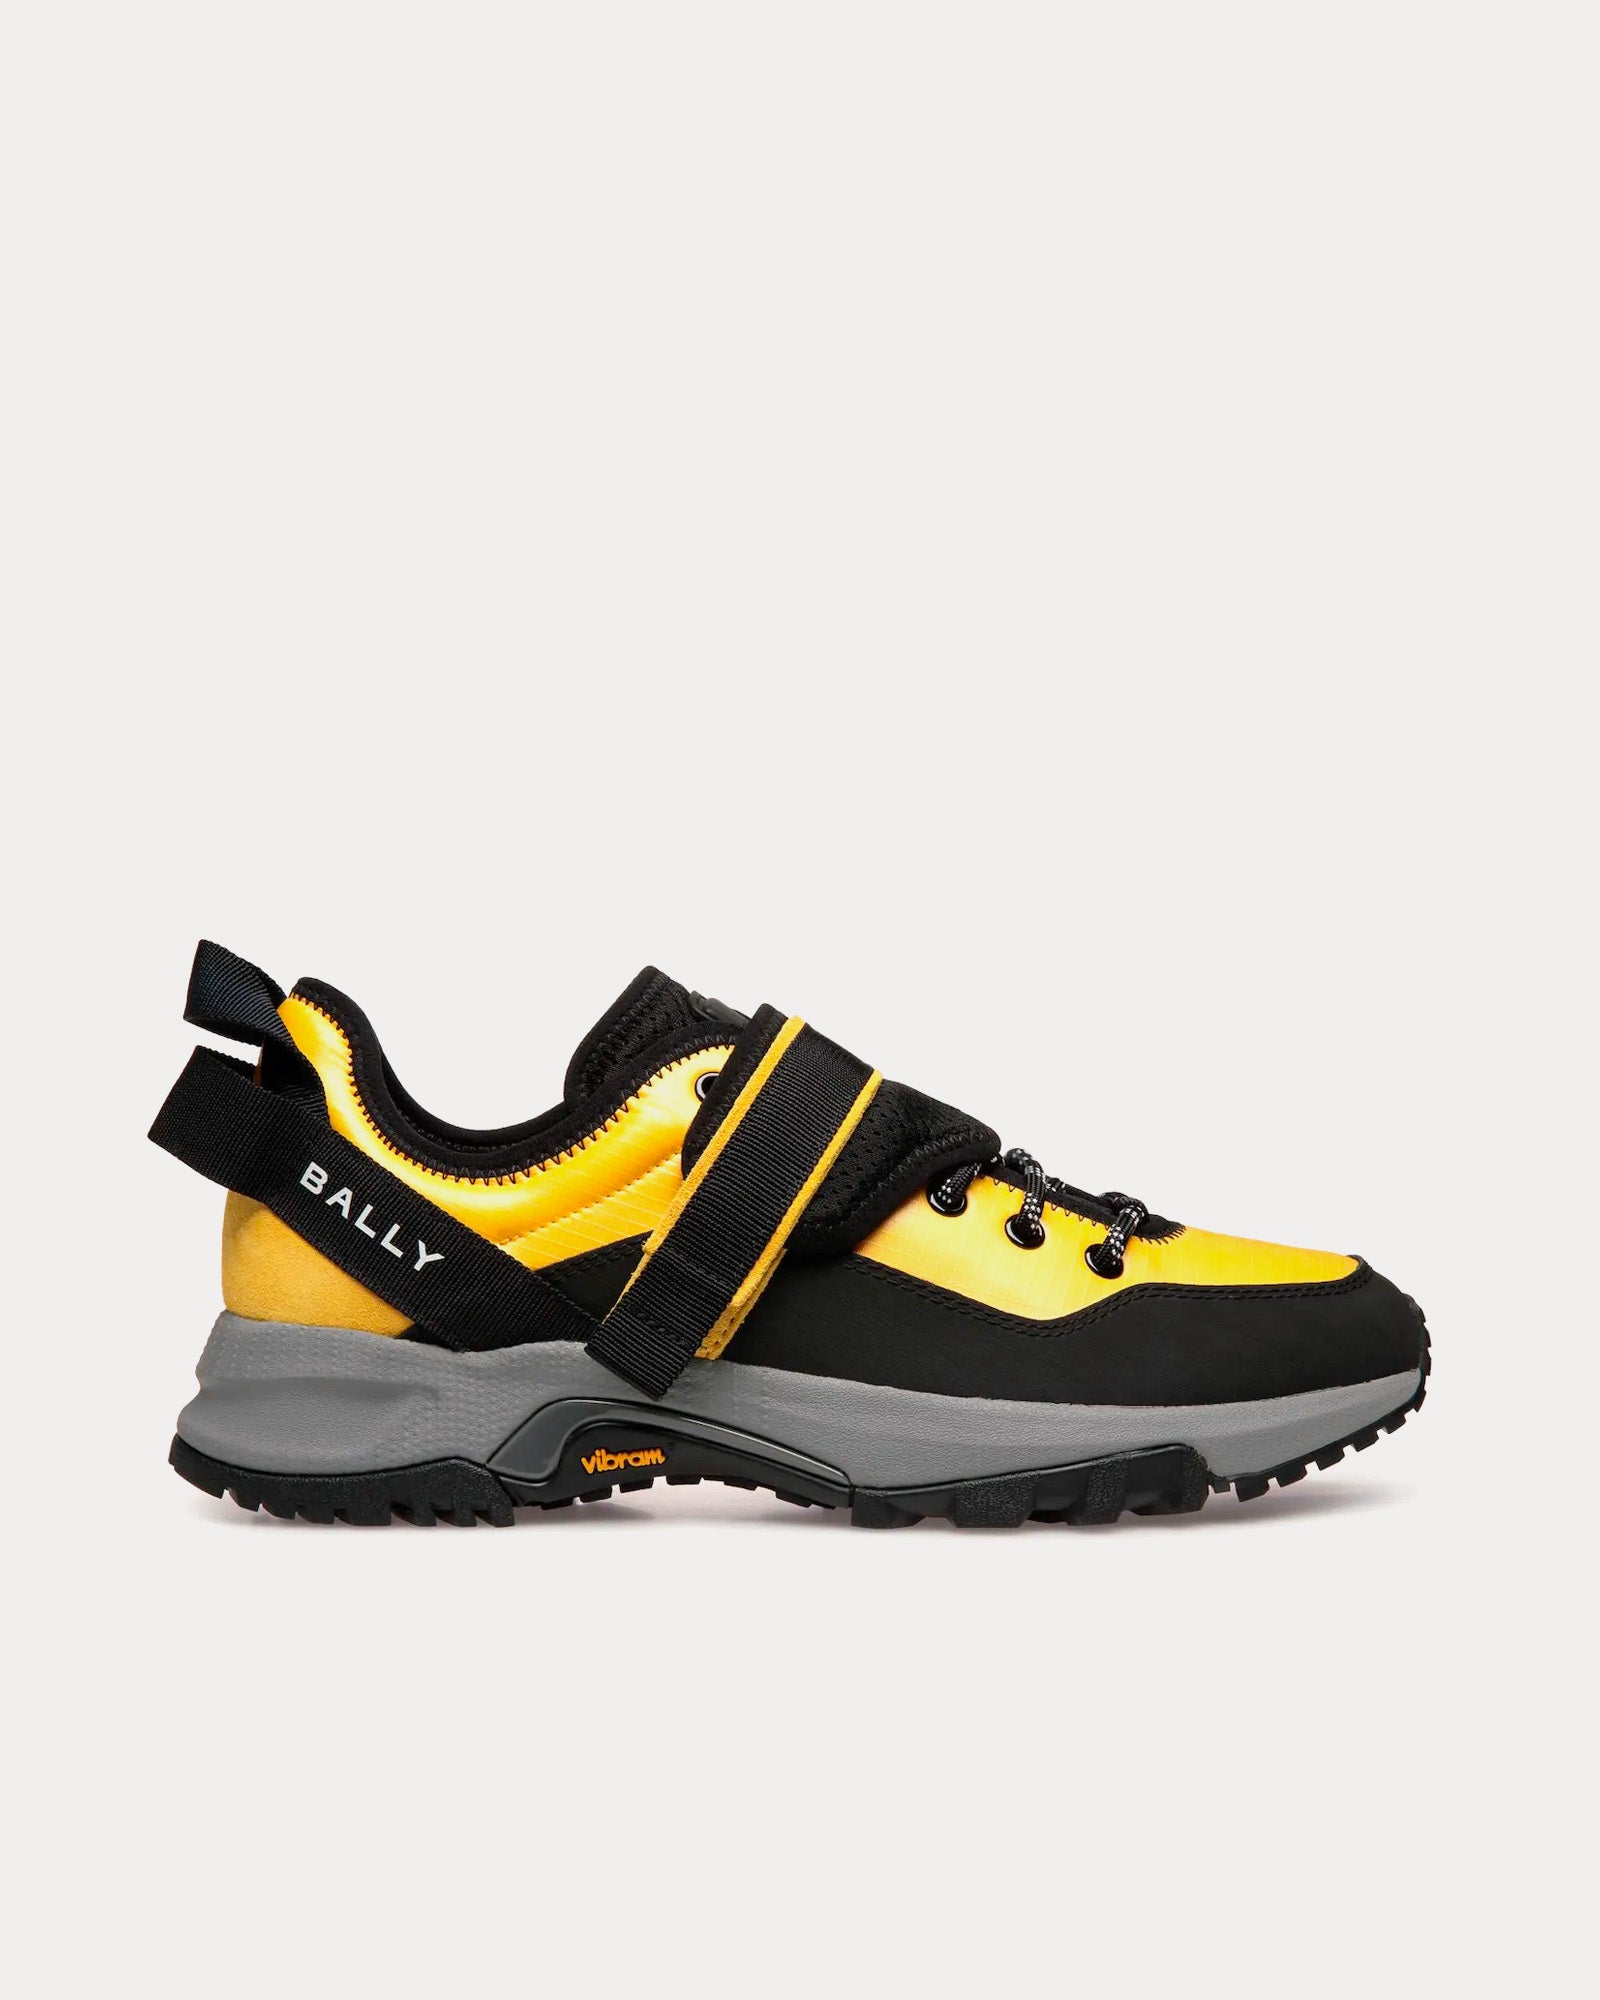 Bally - Fast Nylon Yellow / Black Low Top Sneakers